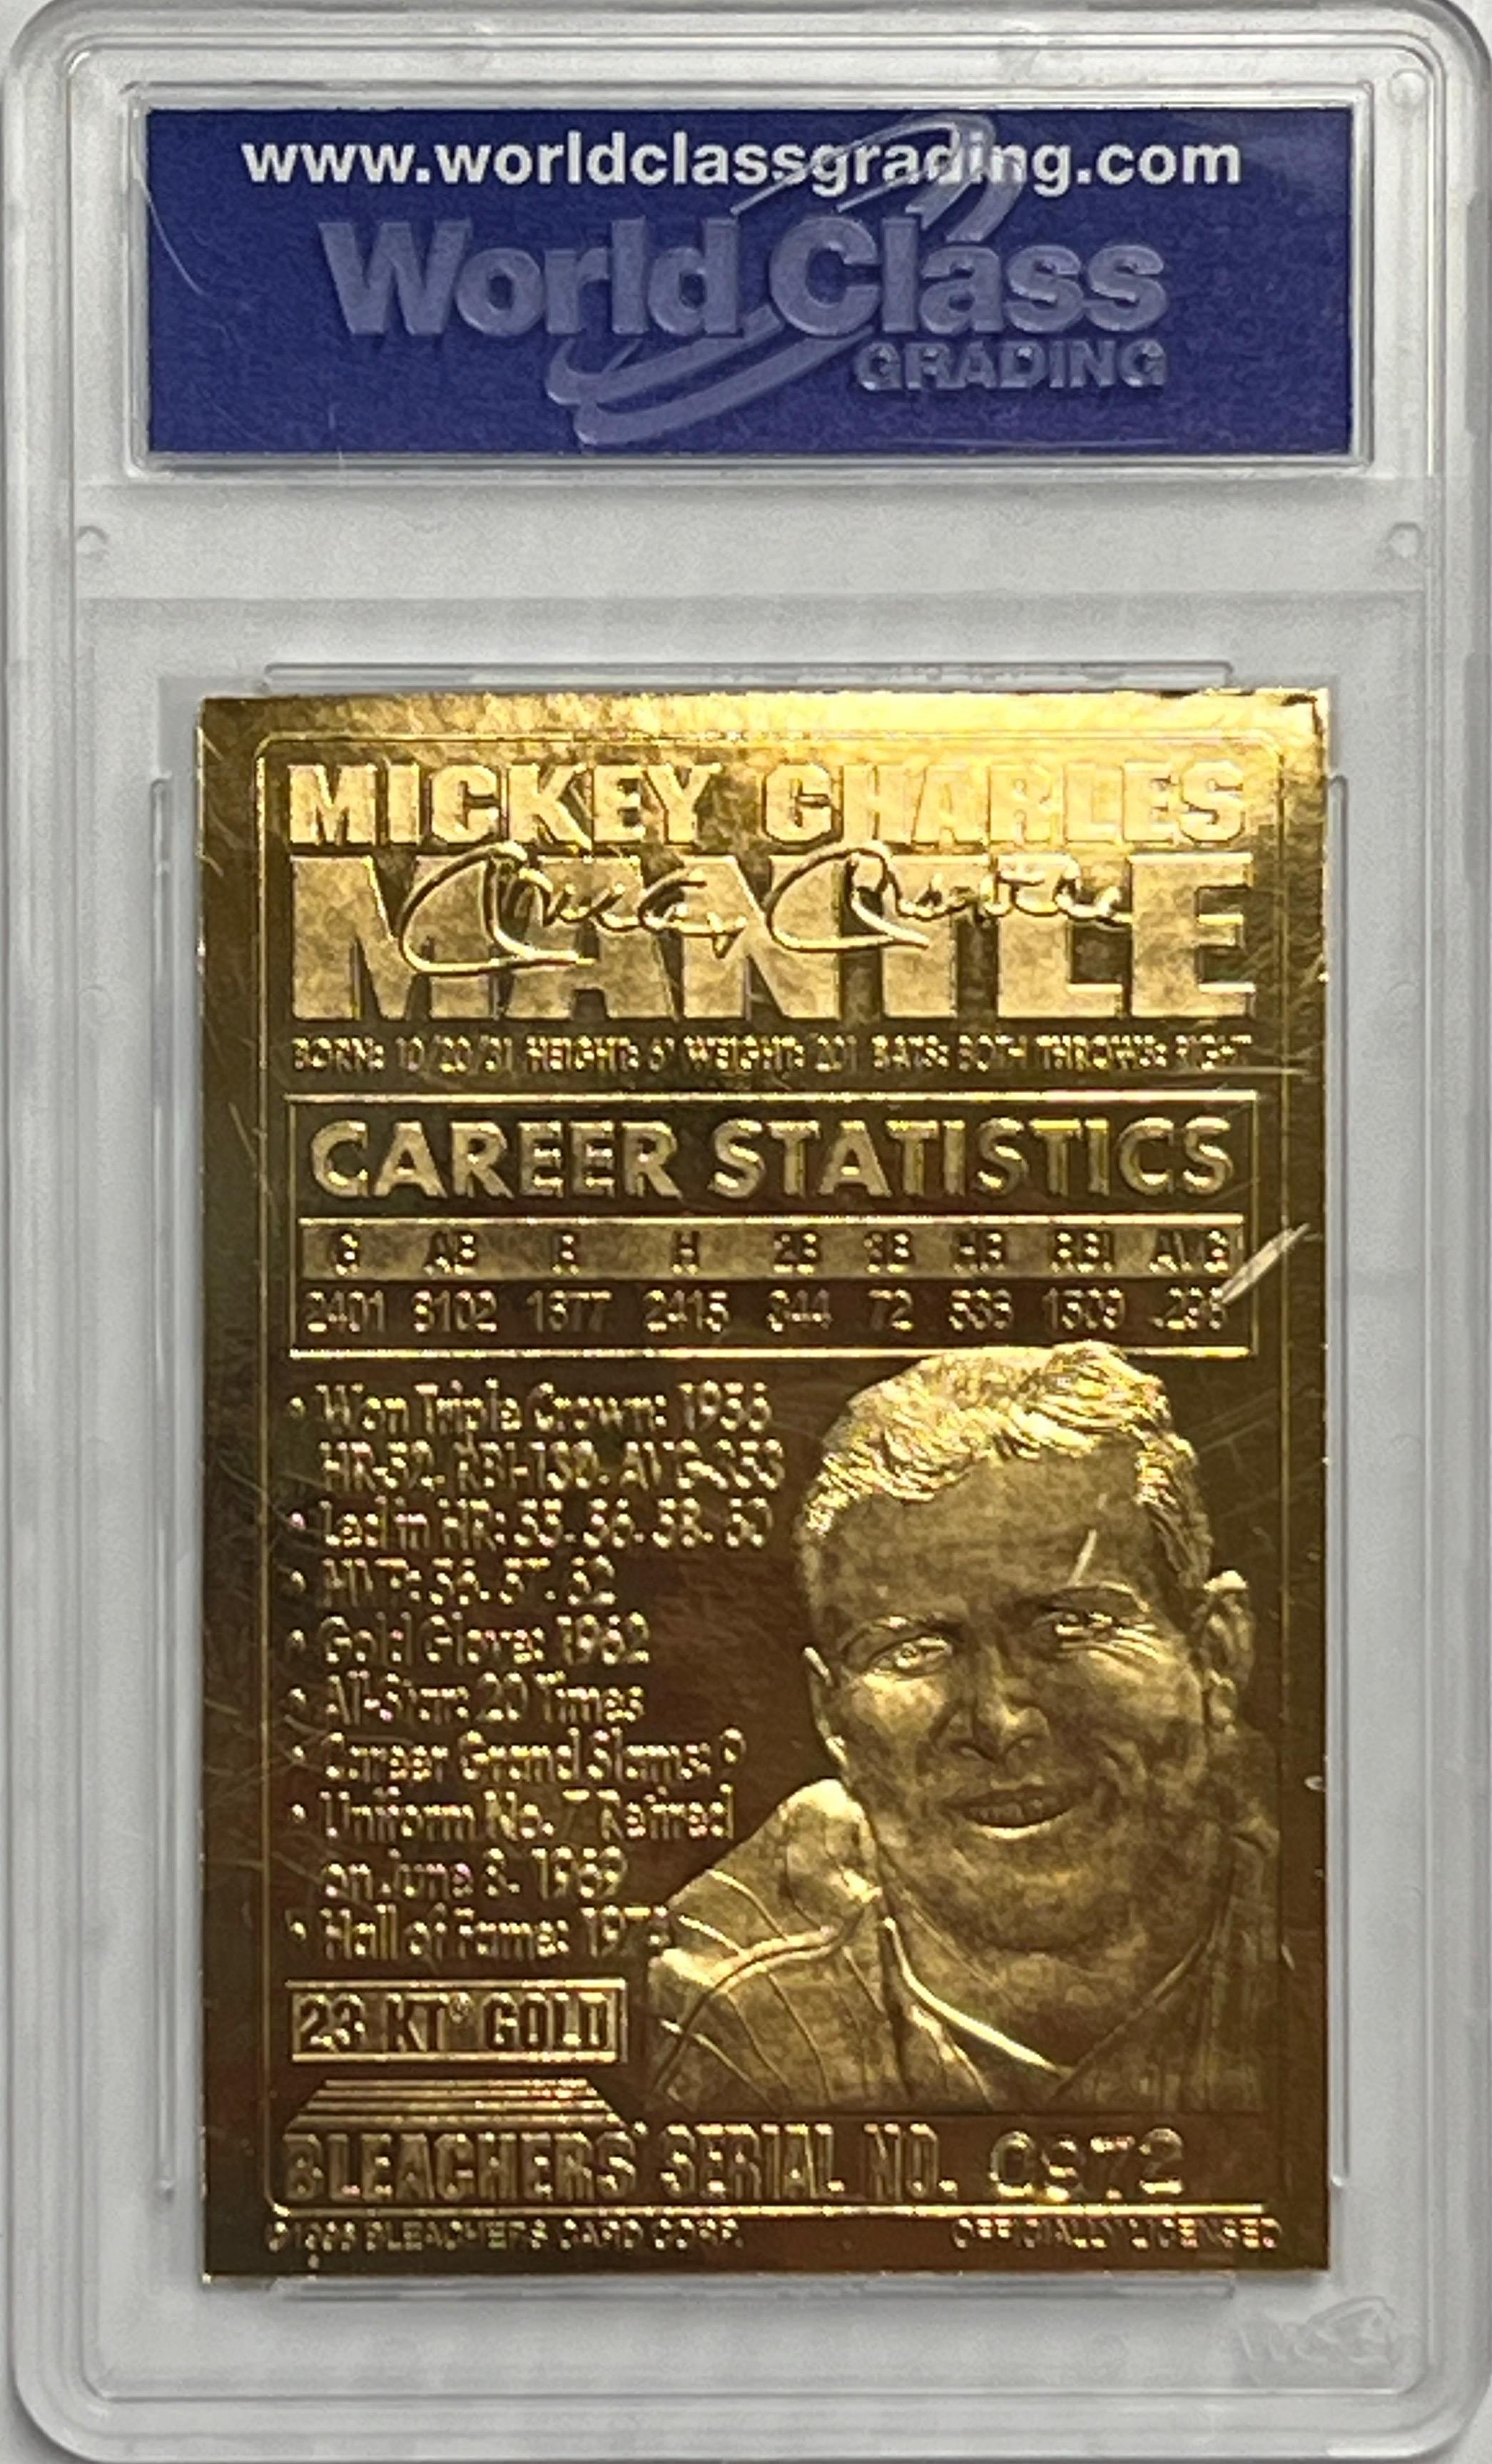 1996 BLEACHERS 23 KARAT GOLD MICKEY MANTLE CARD GRADED WCG GEM-MT 10